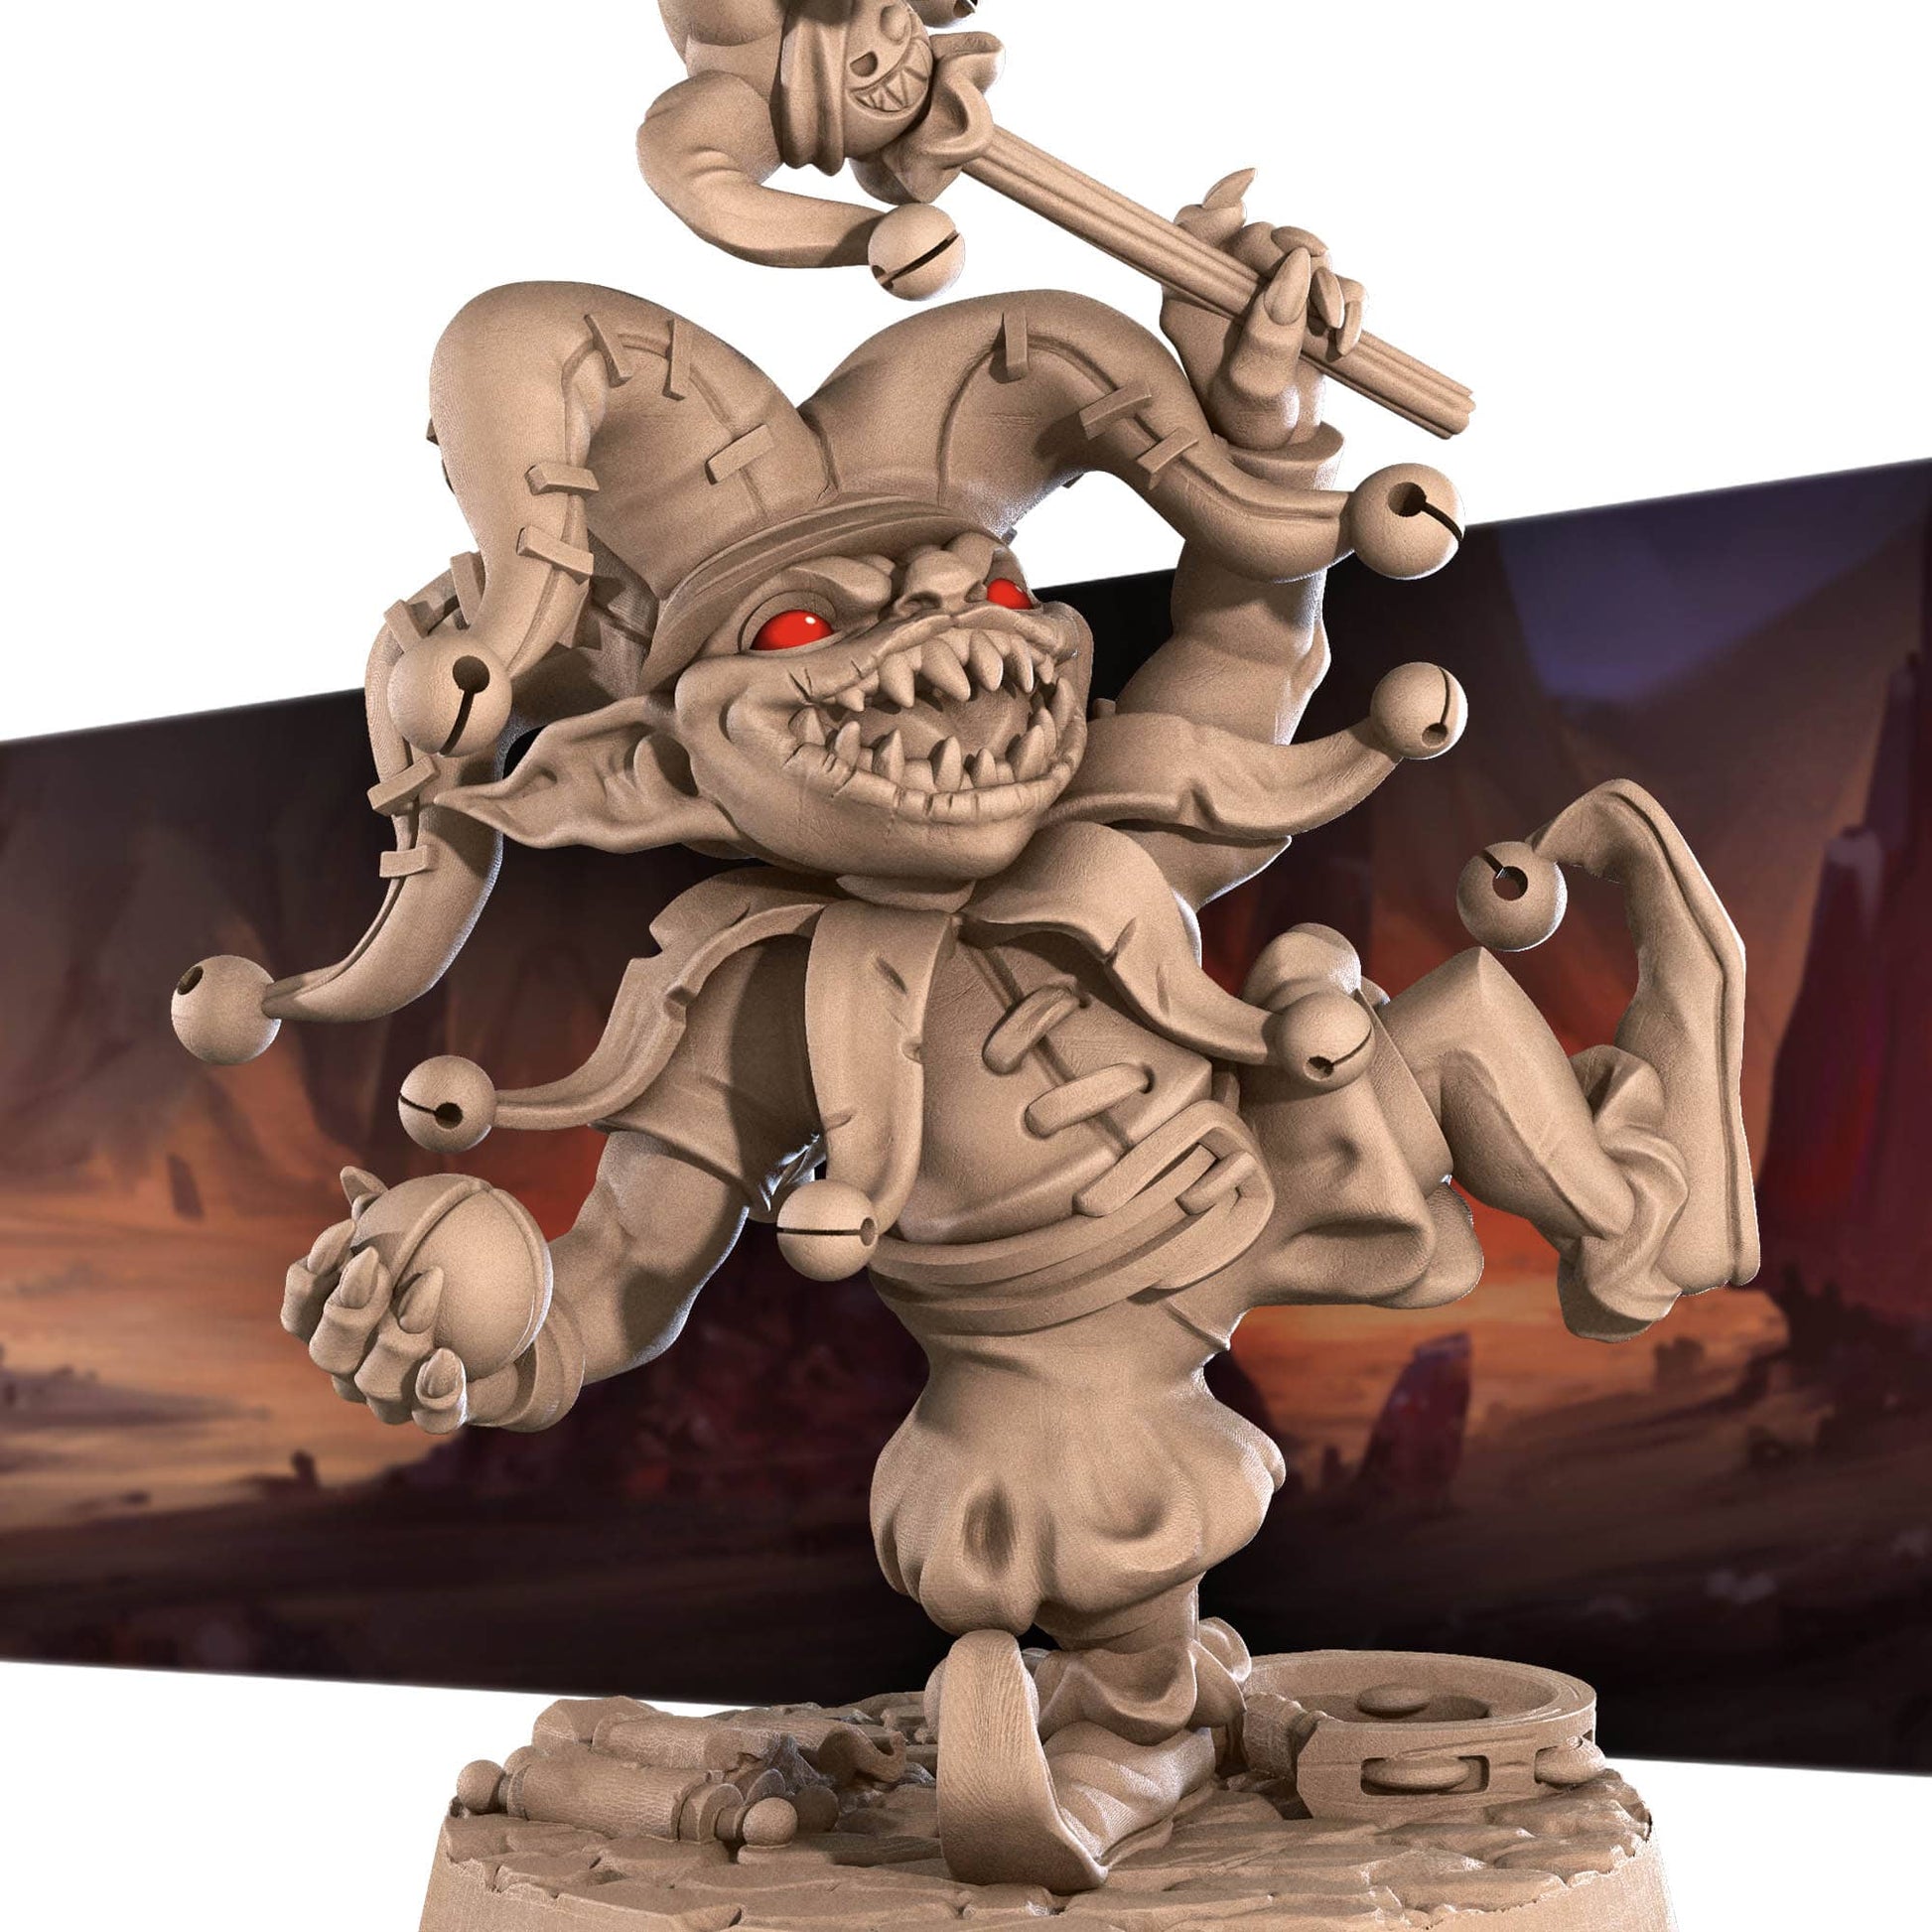 Goblin Jester Clown | D&D Miniature TTRPG Character | Bite the Bullet - Tattles Told 3D